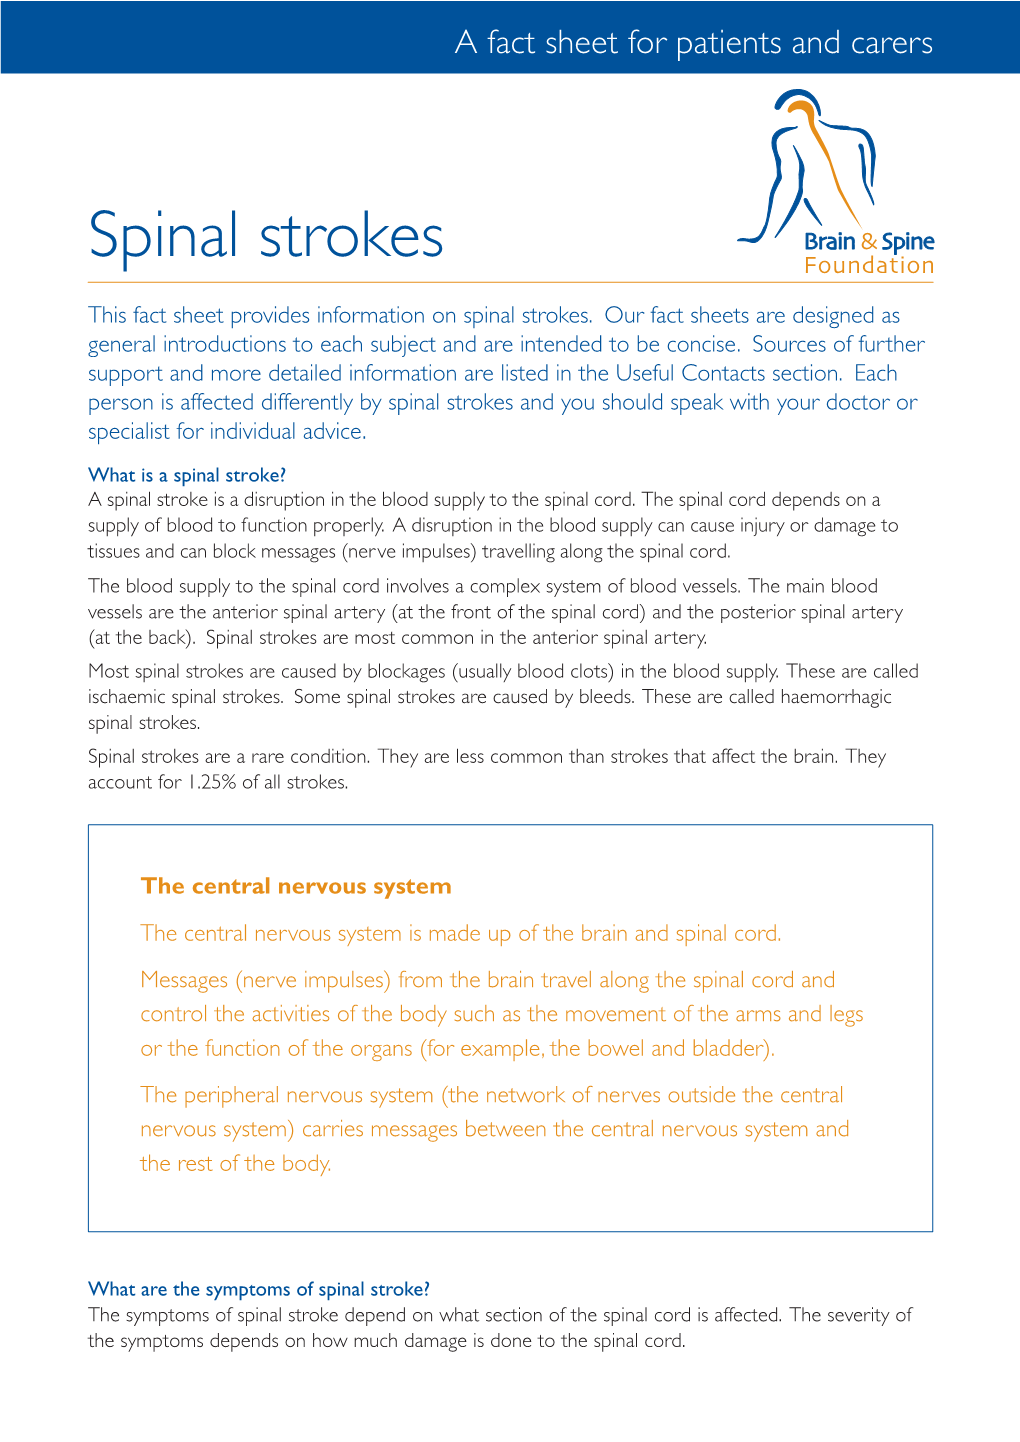 Spinal Strokes